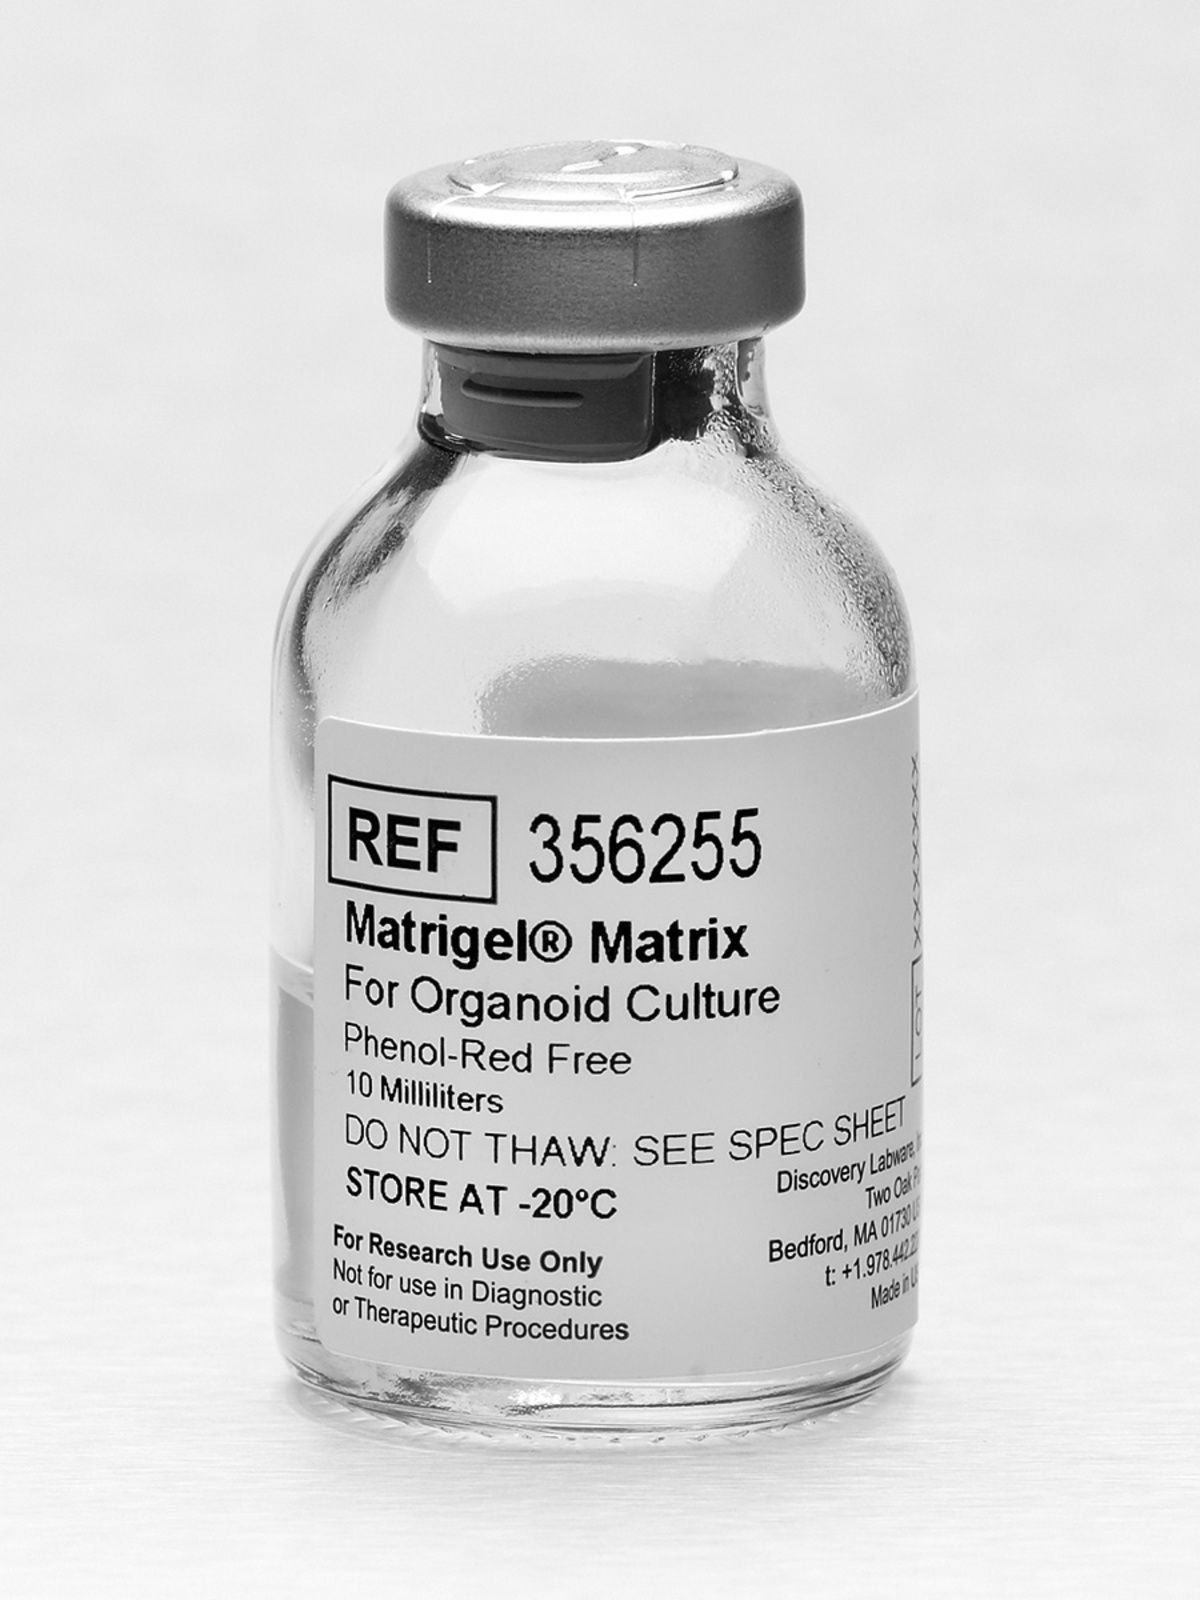 Corning® Matrigel® Matrix For Organoid Culture Phenol-Red Free, 10mL